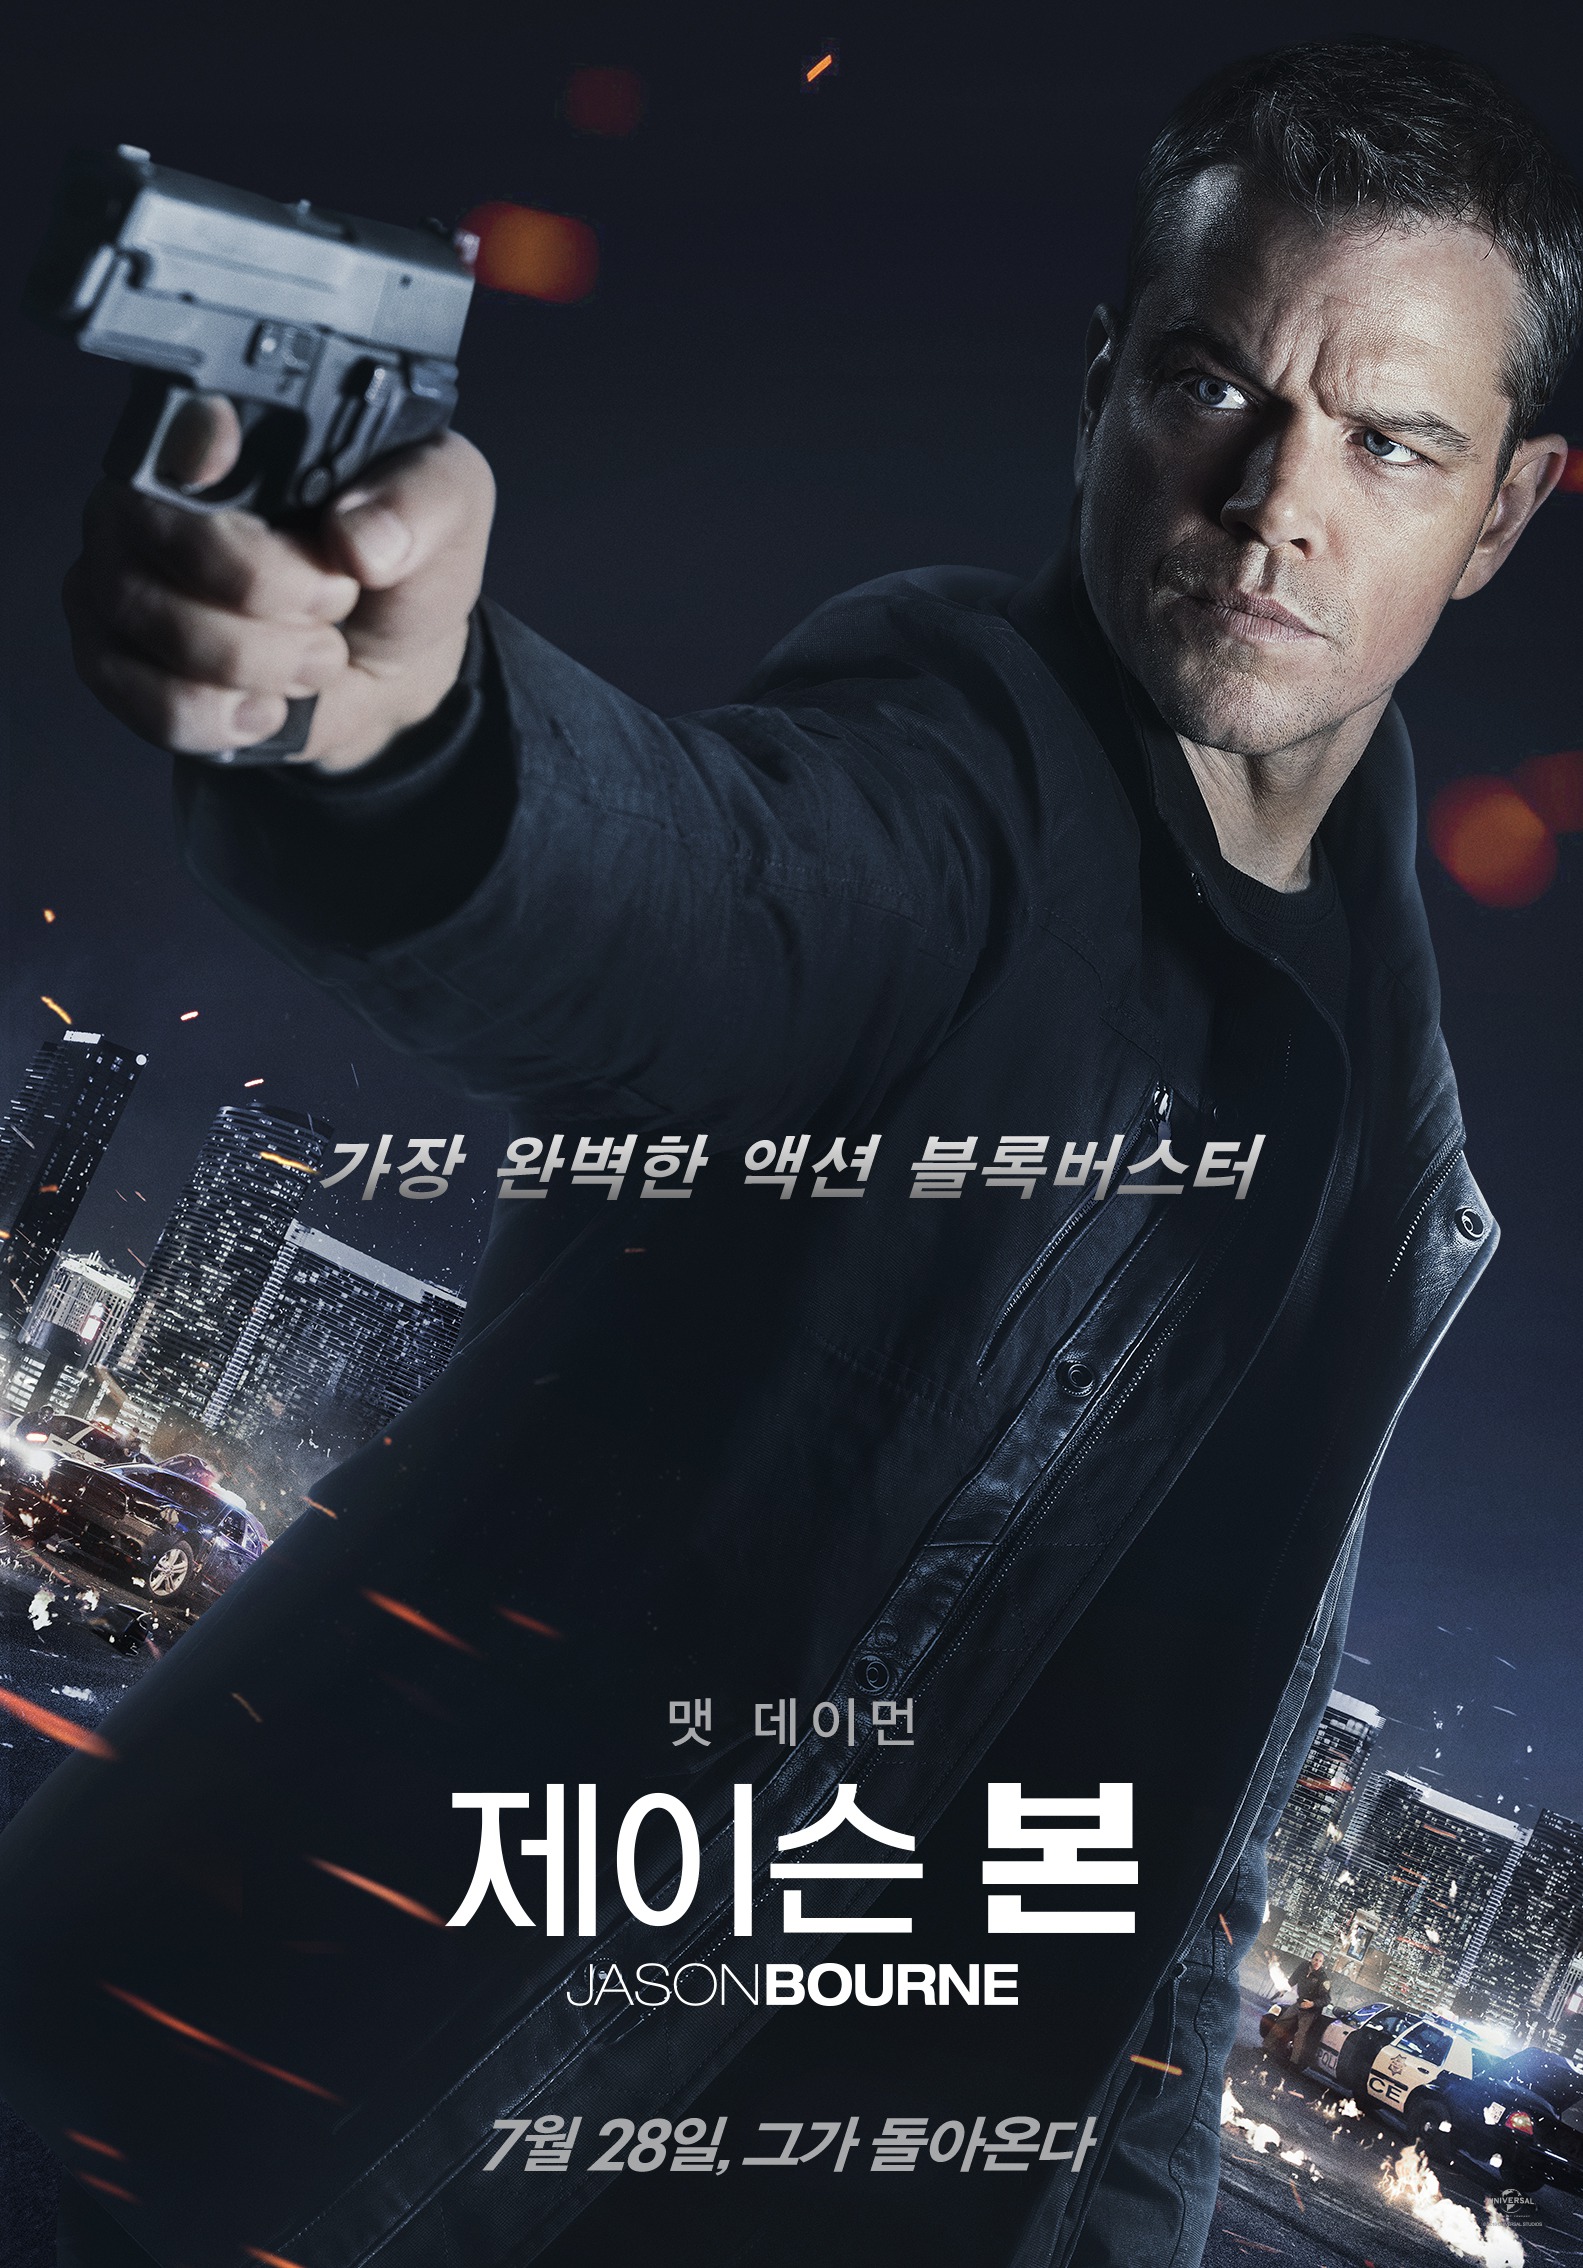 Mega Sized Movie Poster Image for Jason Bourne (#5 of 6)